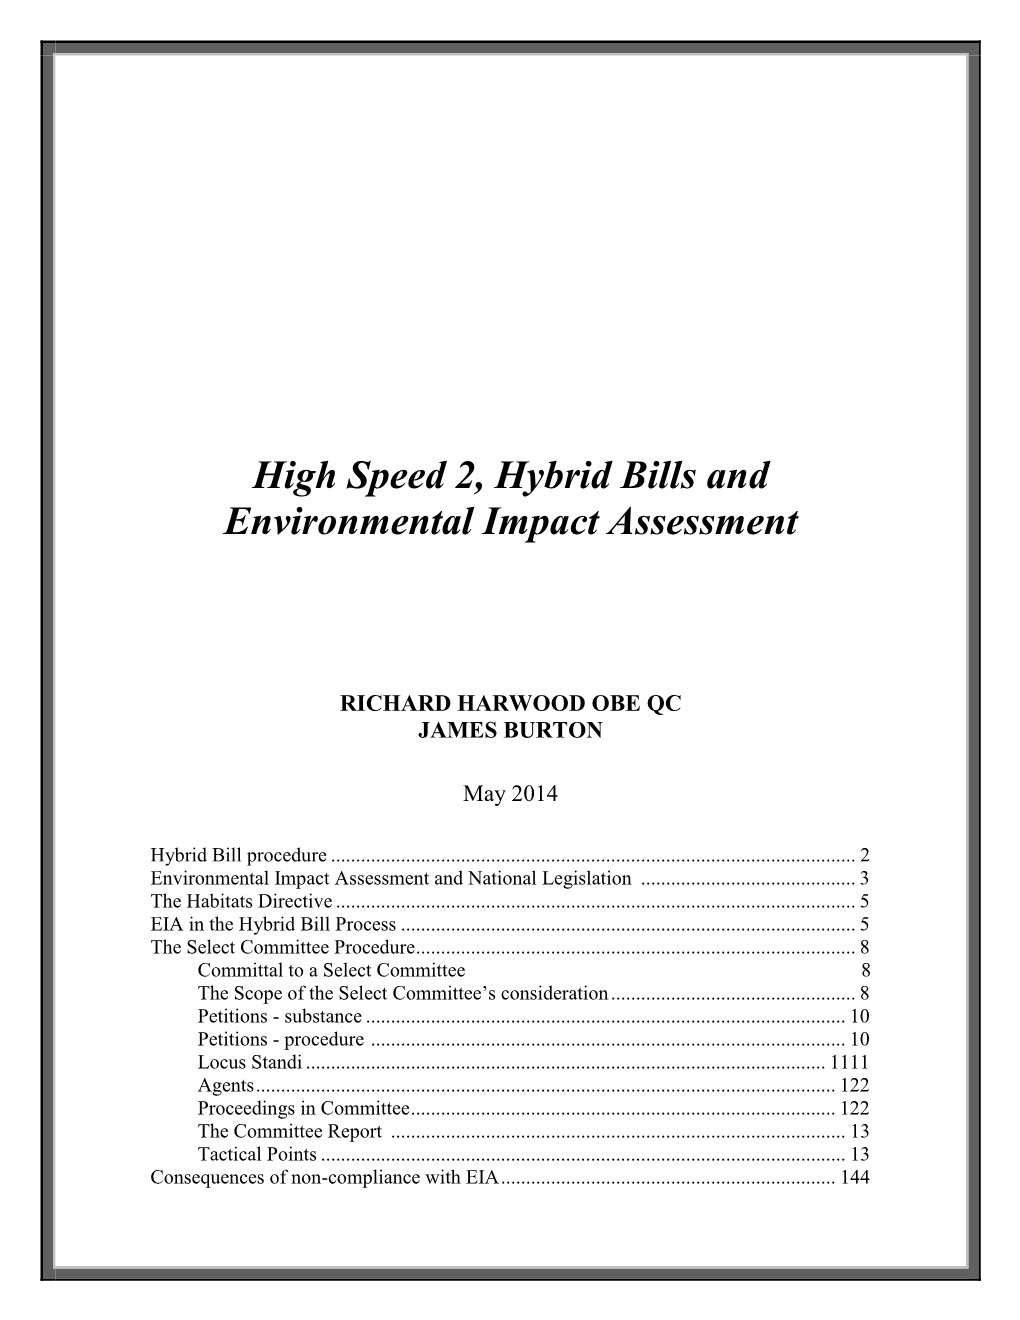 High Speed 2, Hybrid Bills and Environmental Impact Assessment